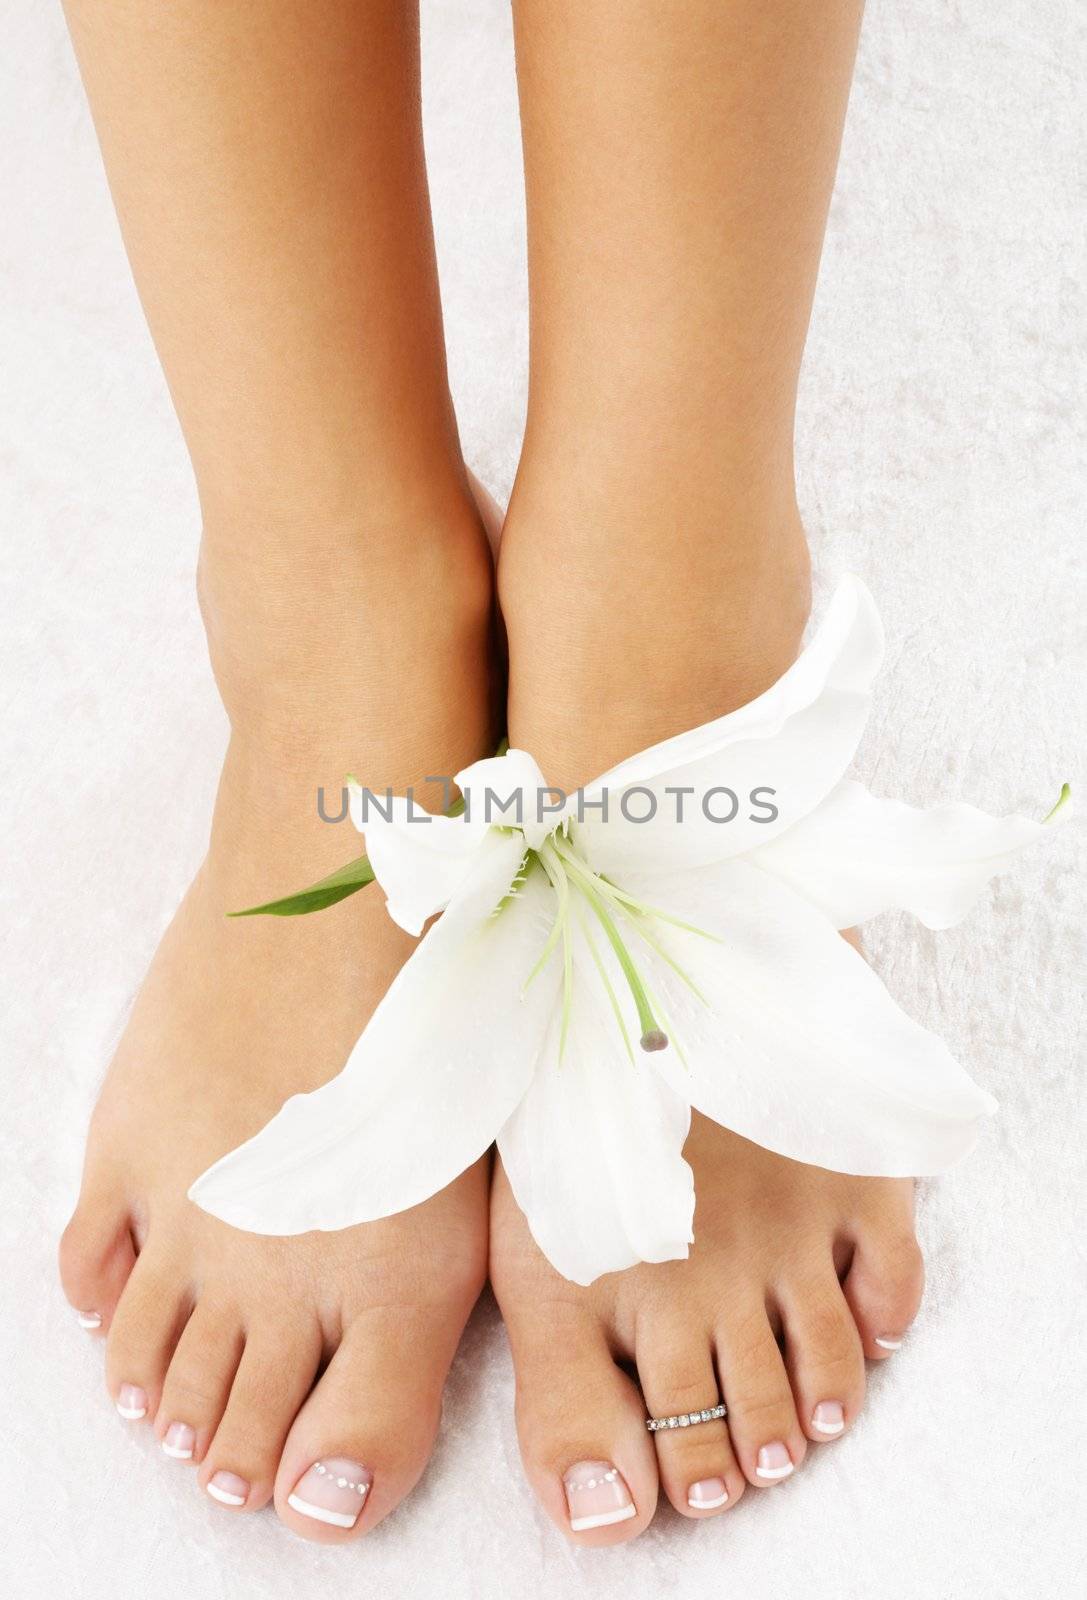 feet with madonna lily by dolgachov